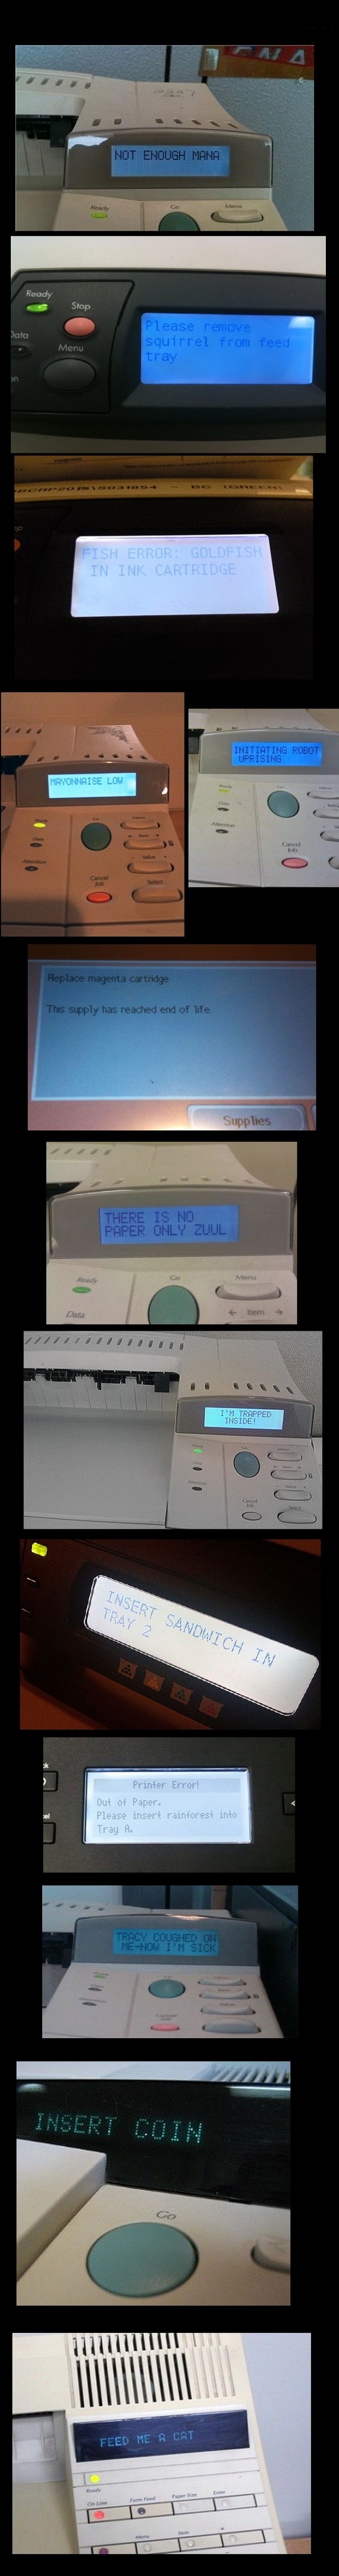 funny-picture-printers-copiers-errors